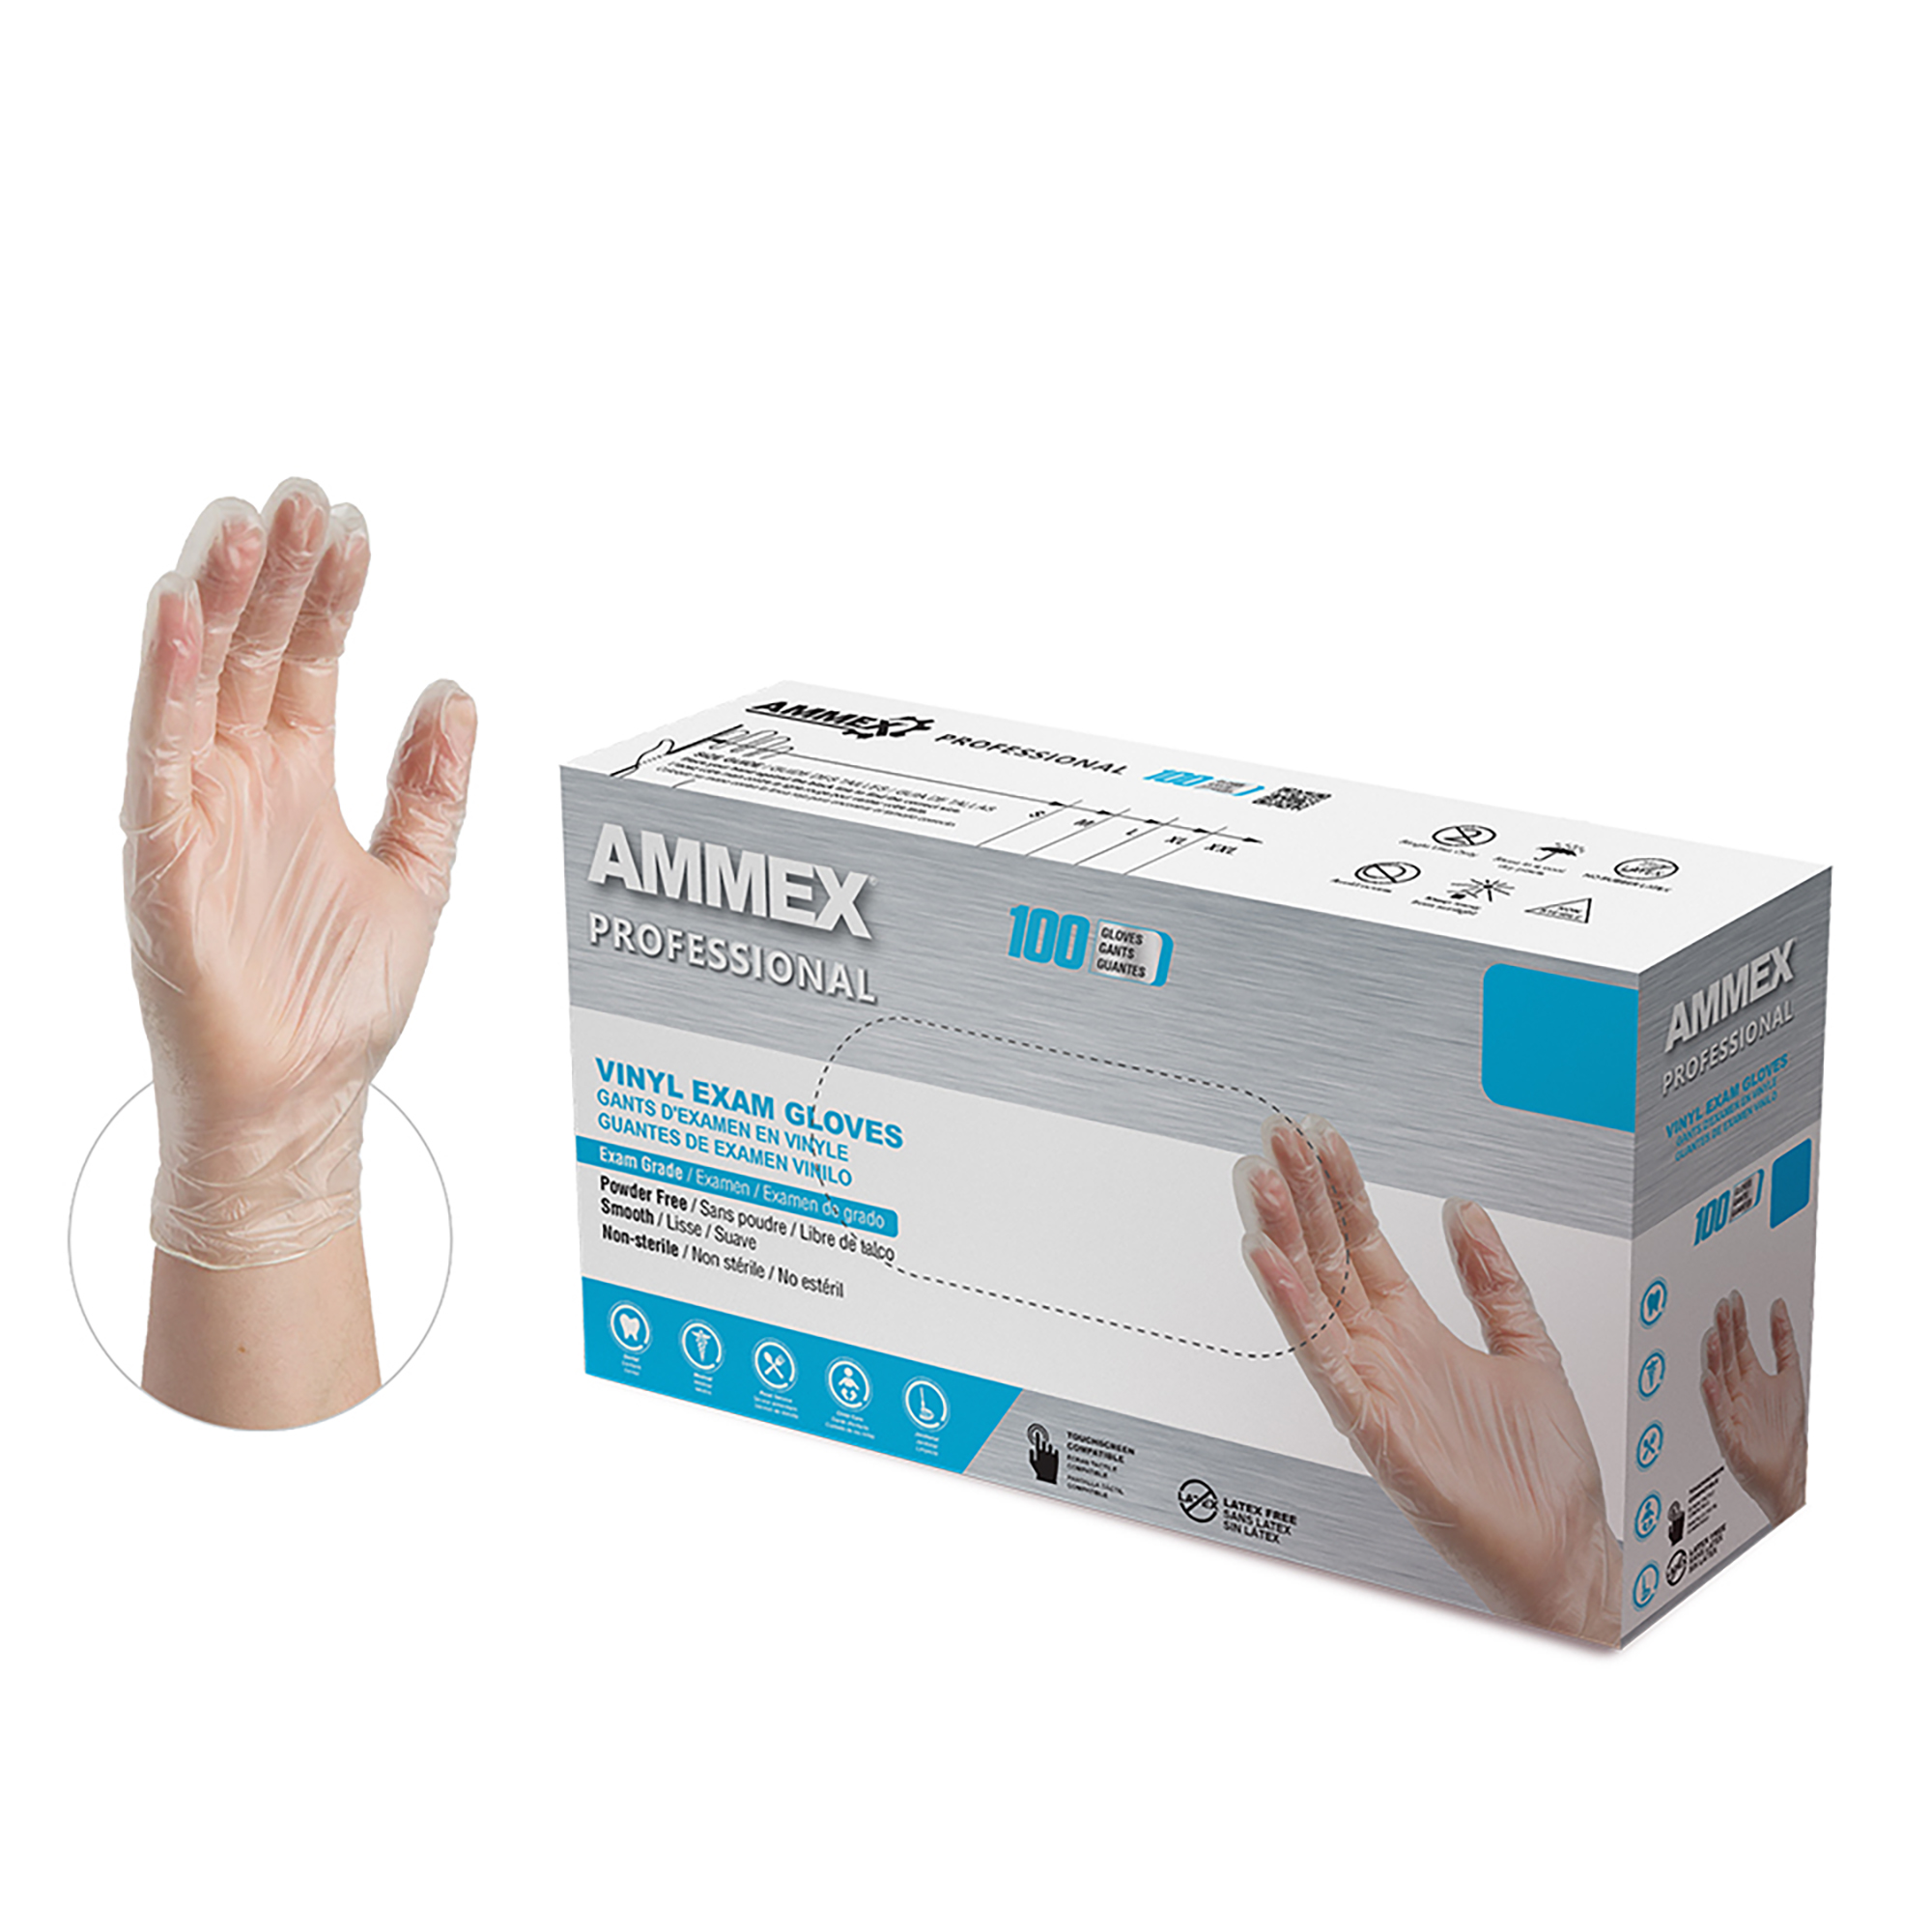 Ammex Vinyl Exam Gloves, Clear, Medium $110.12/Case of 1000 MedPlus VPF64100